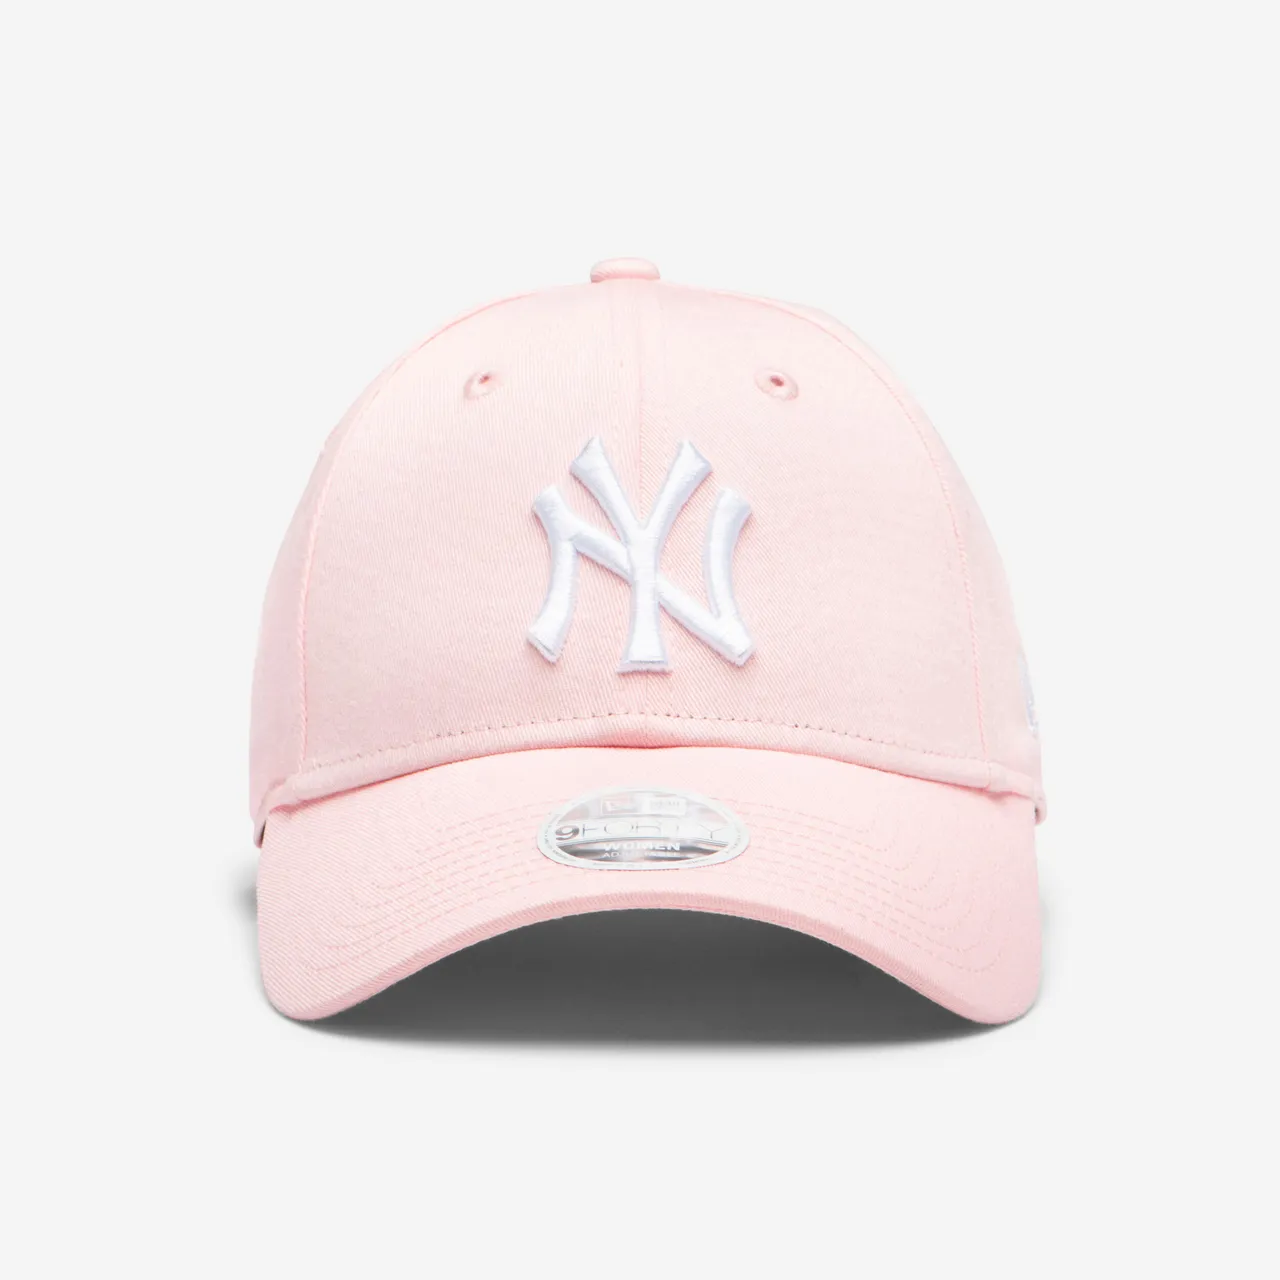 Men's / Women'smlb Baseball Cap New York Yankees - Pink